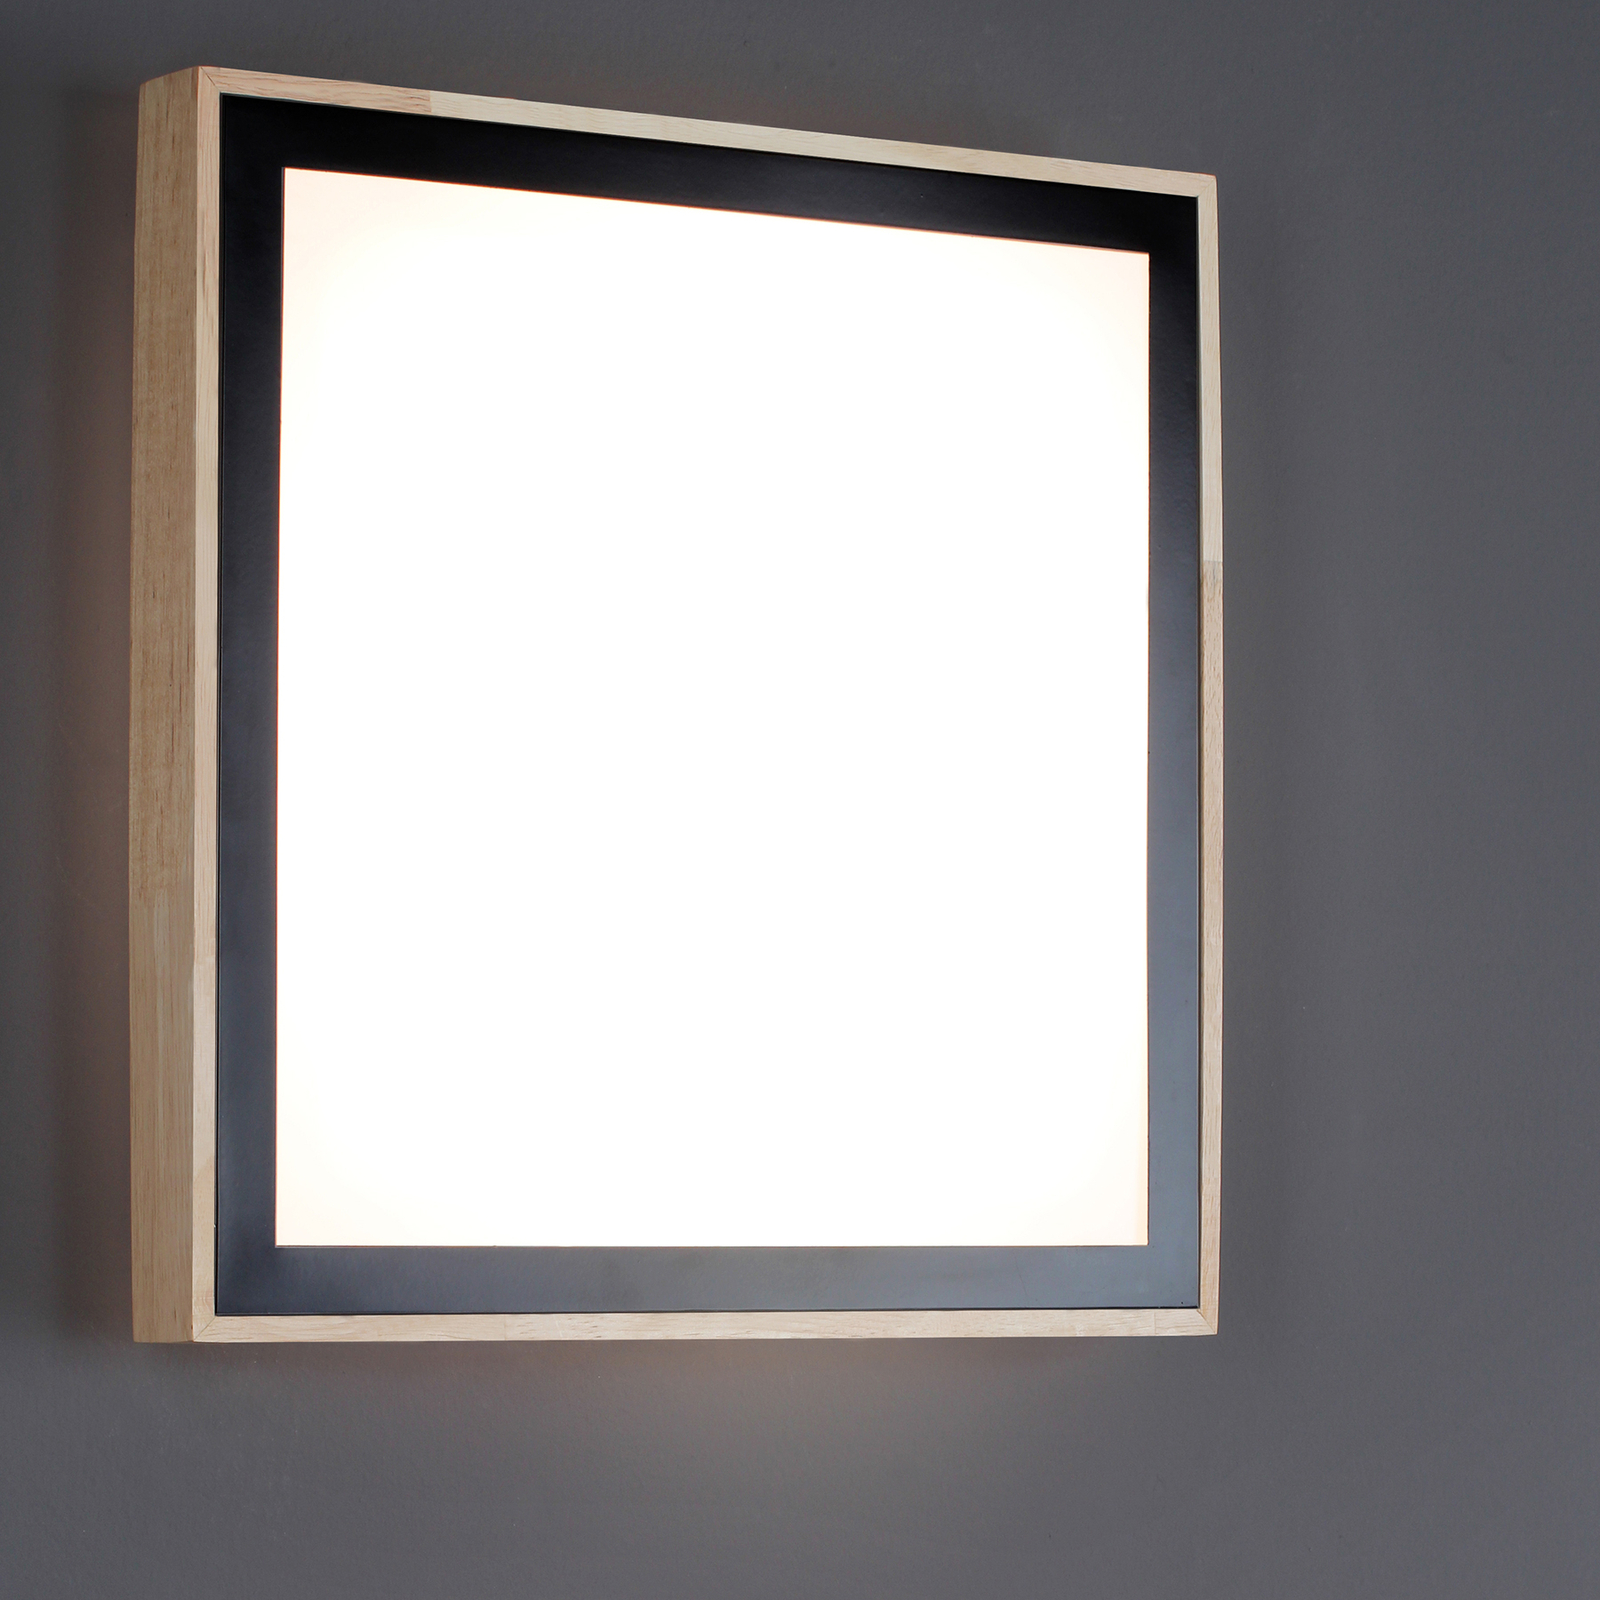 Lampa sufitowa LED Solstar, kątowa, 33,5 x 33,5 cm